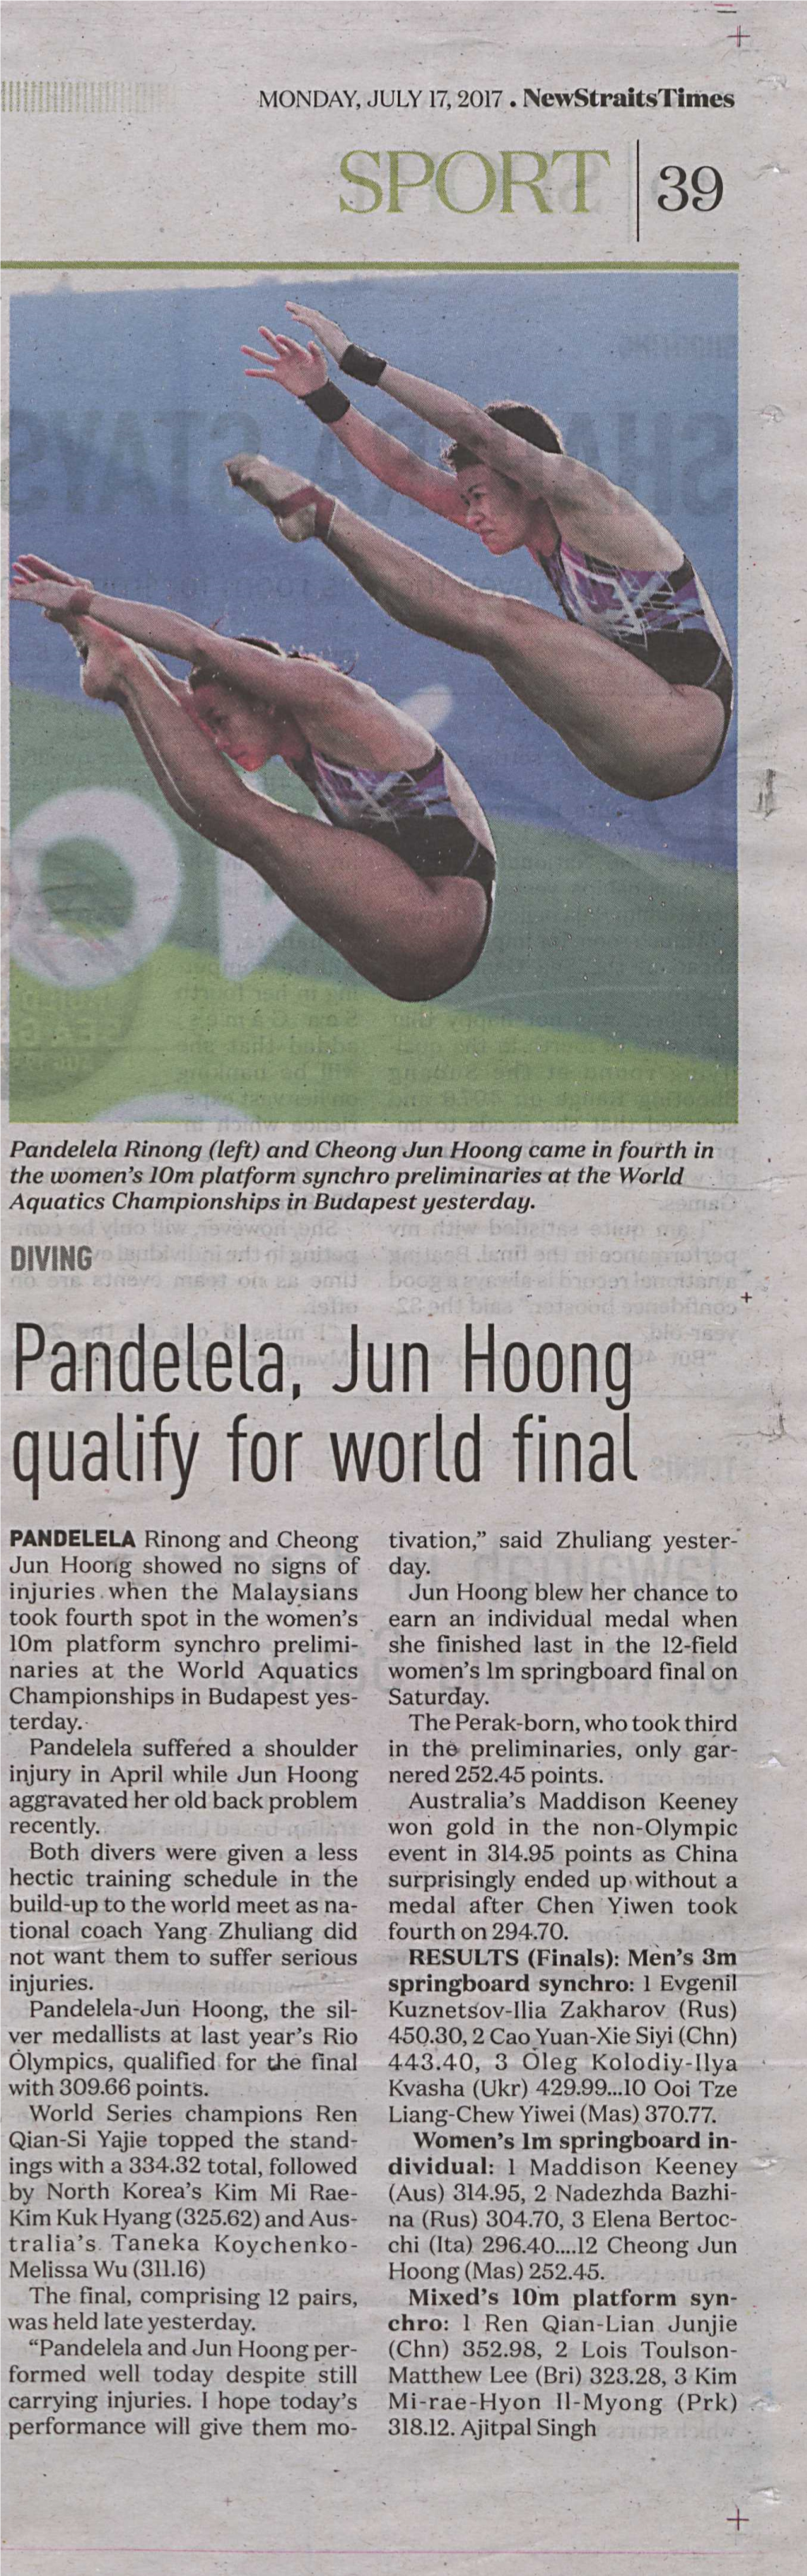 Pa-Ndehha. Jun Hoong Qua.Lify for World Final